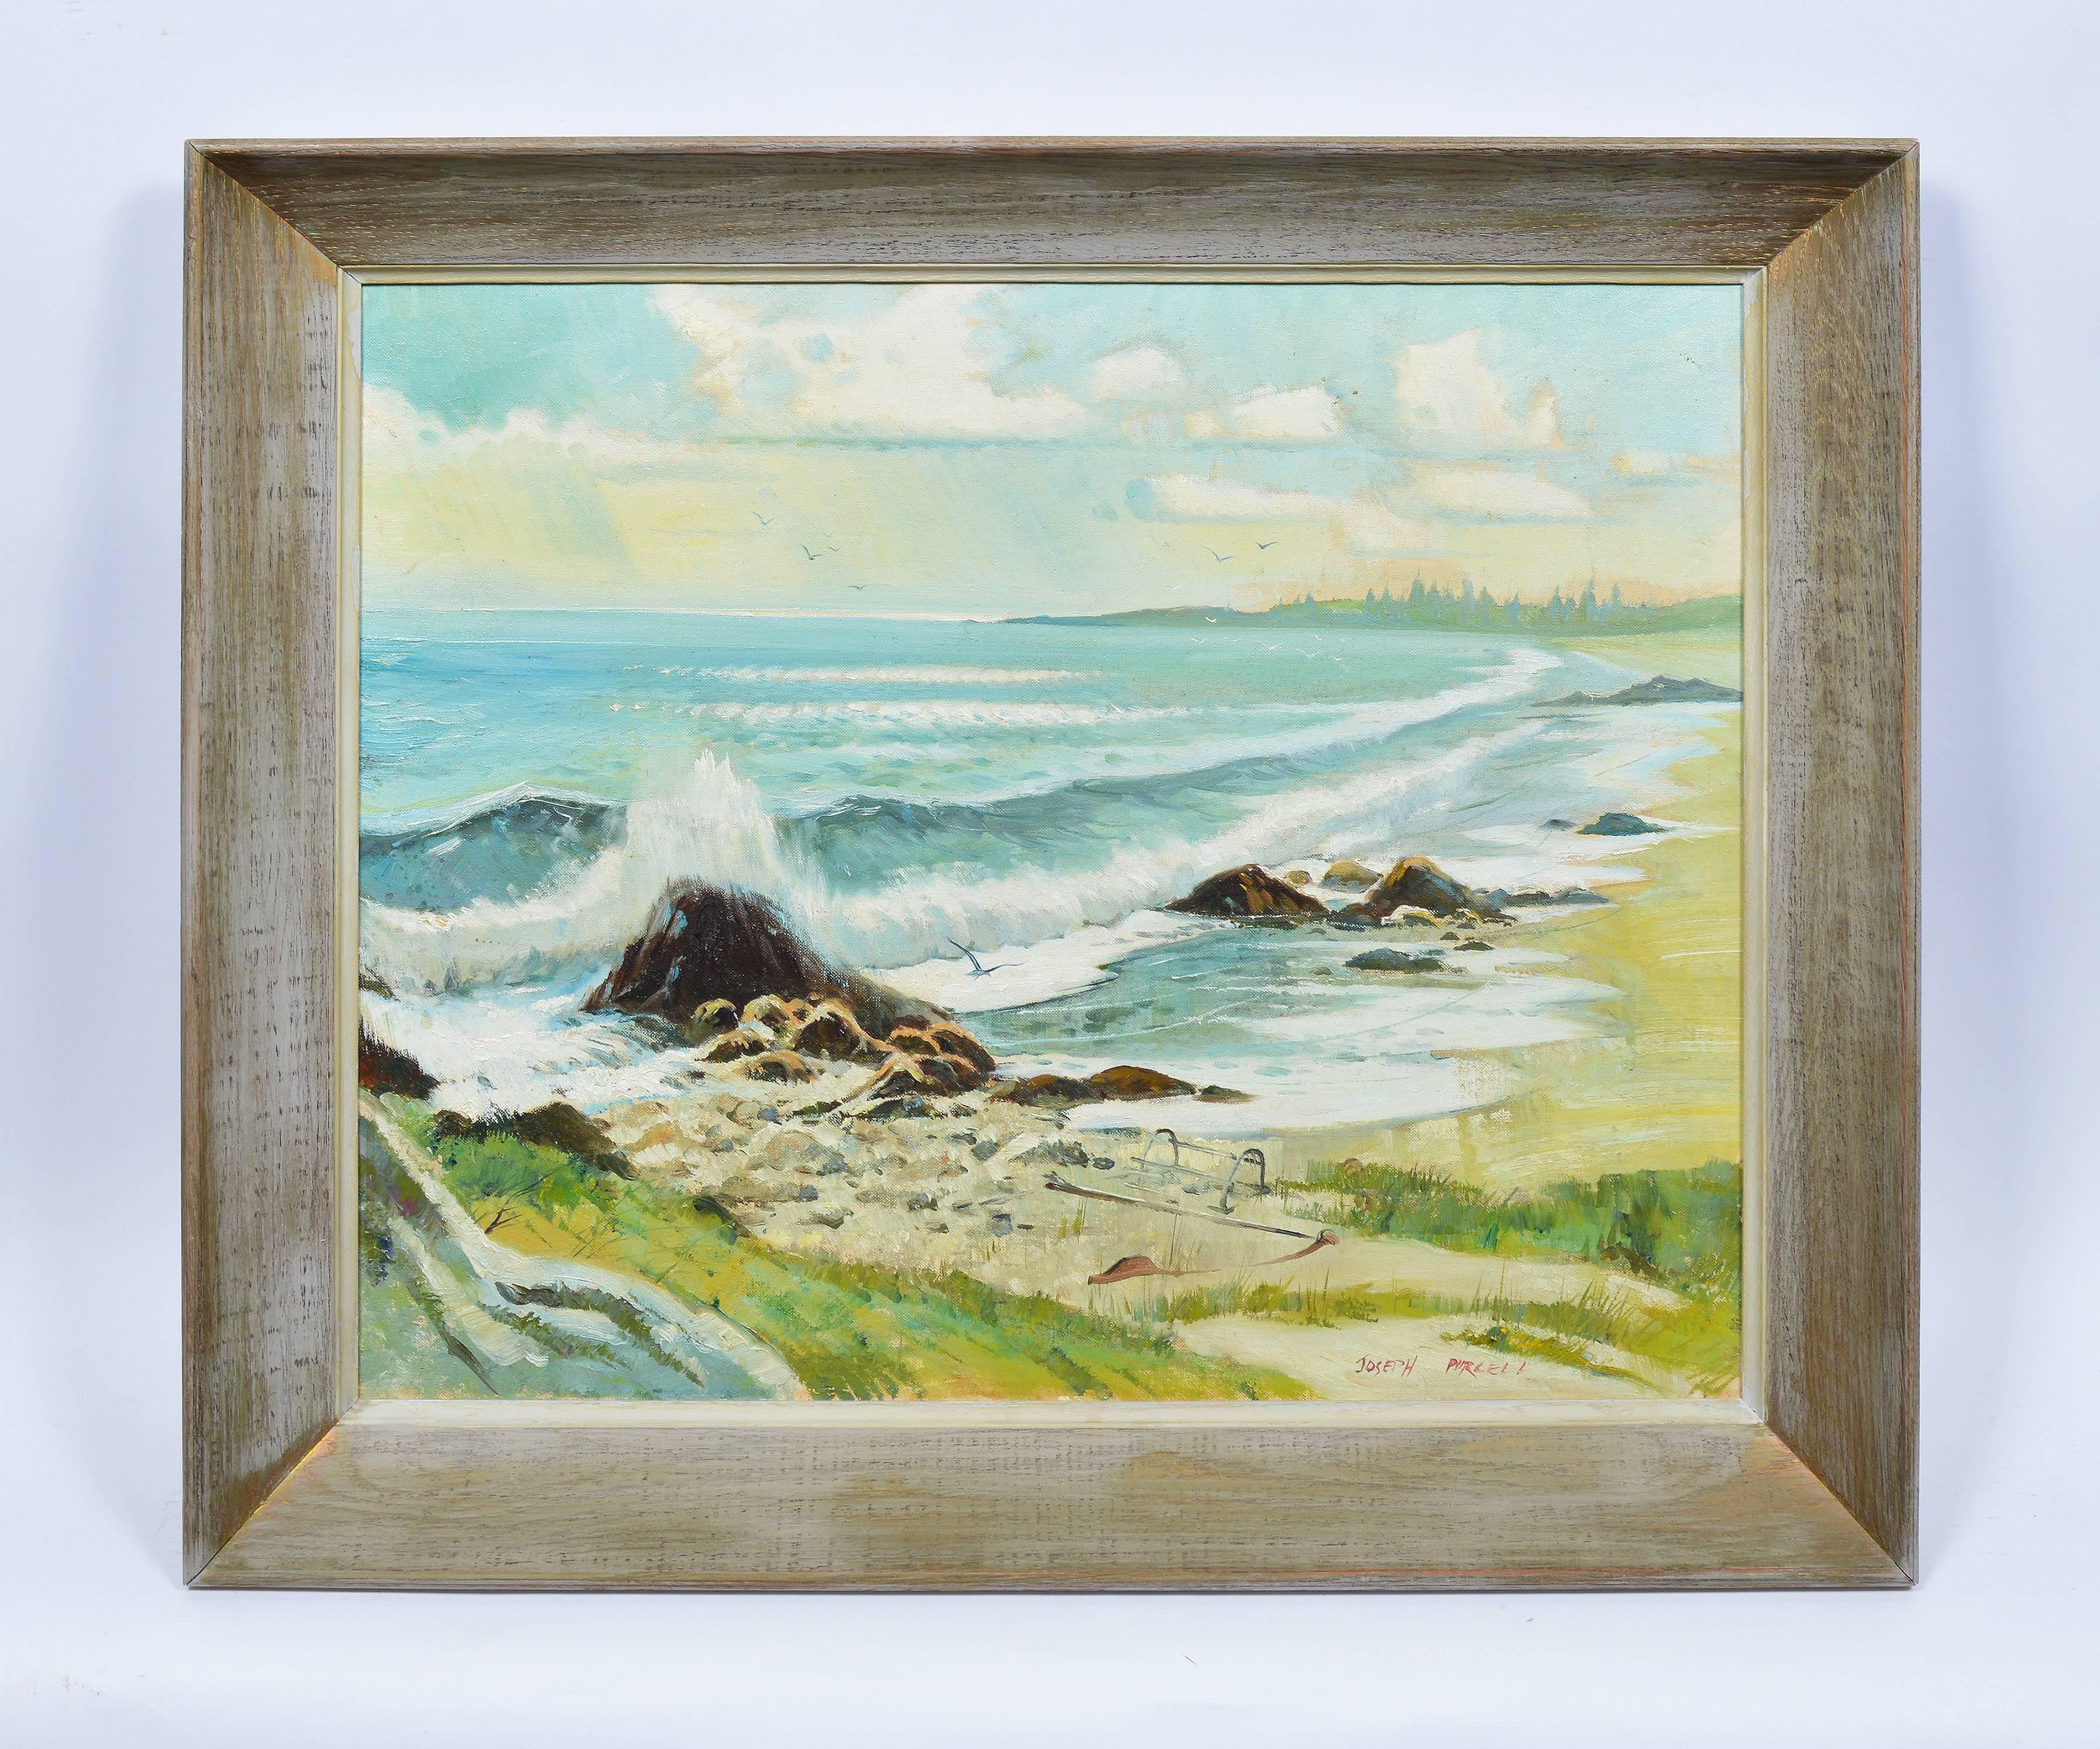 Waves Crashing at Nova Scotia - Painting by Joseph Purcell